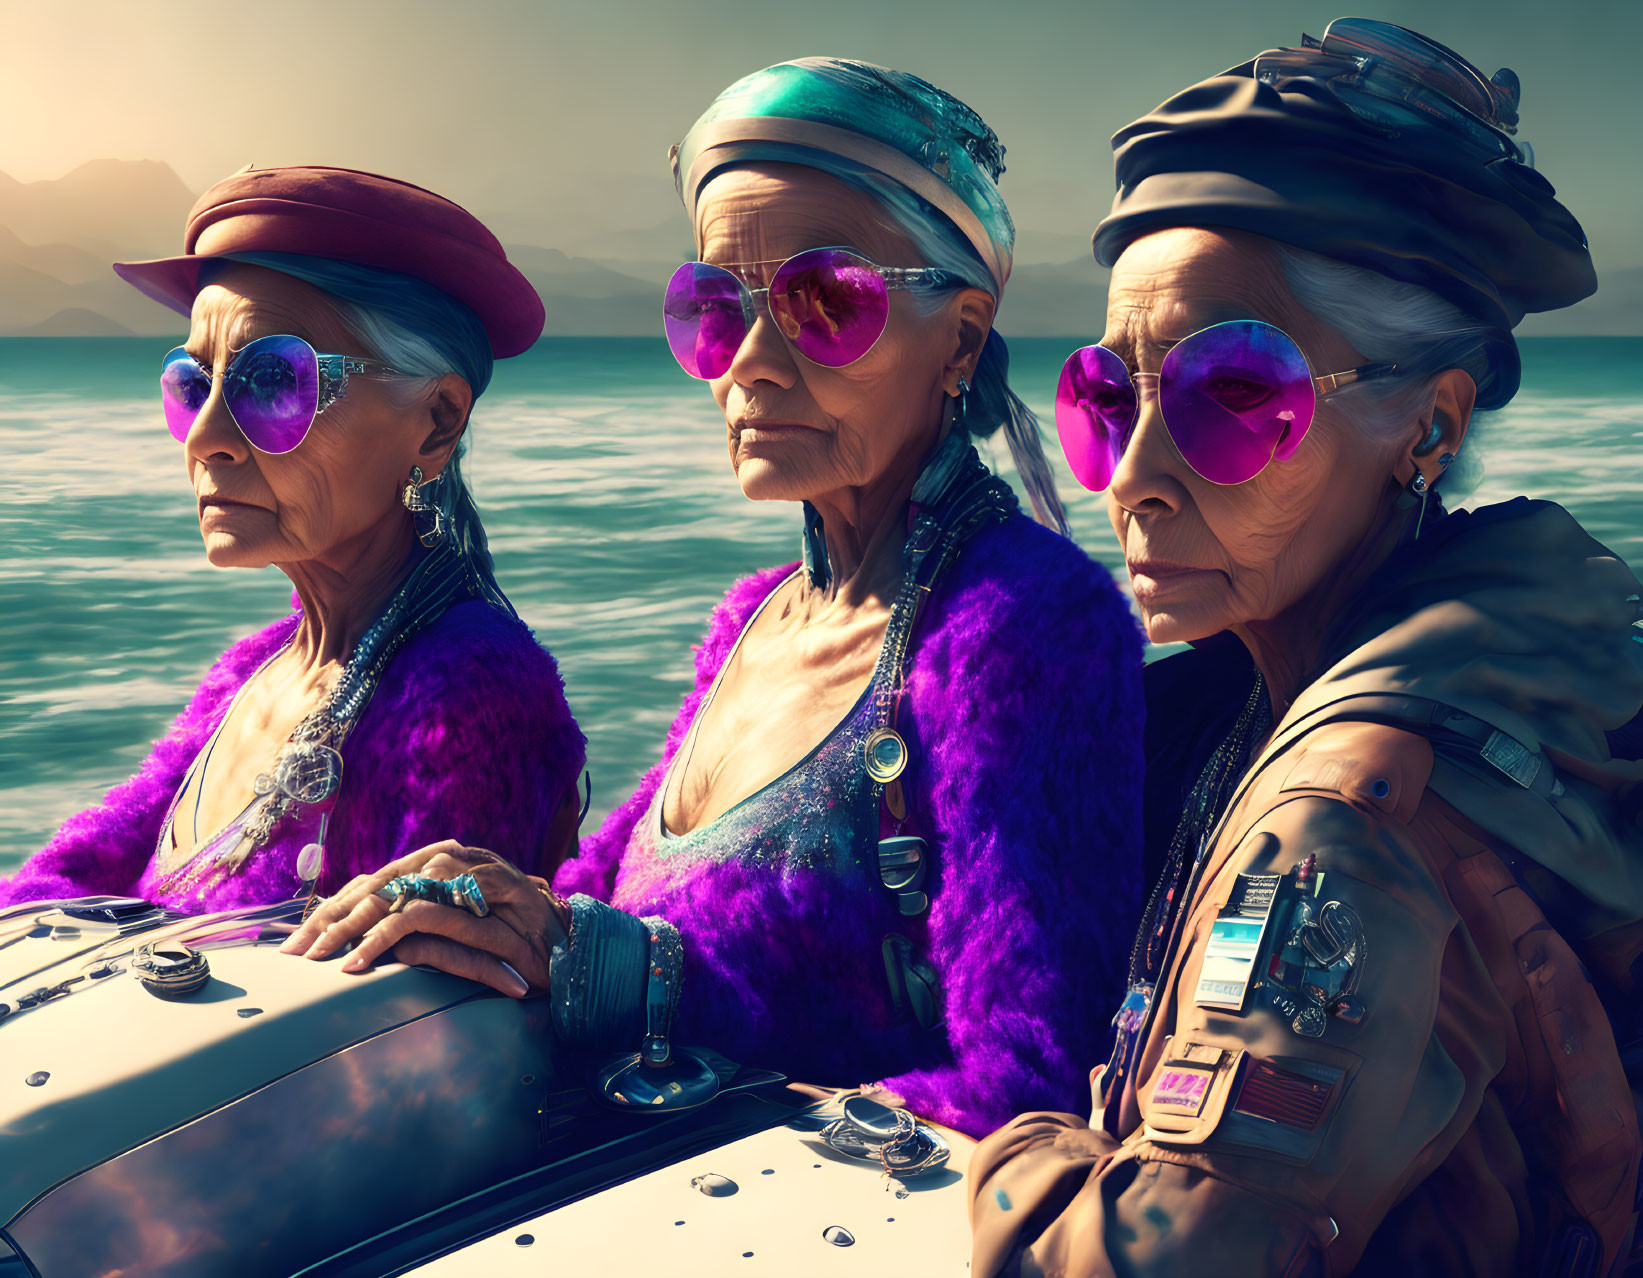 Elderly Women in Purple Attire with Vibrant Sunglasses by Water